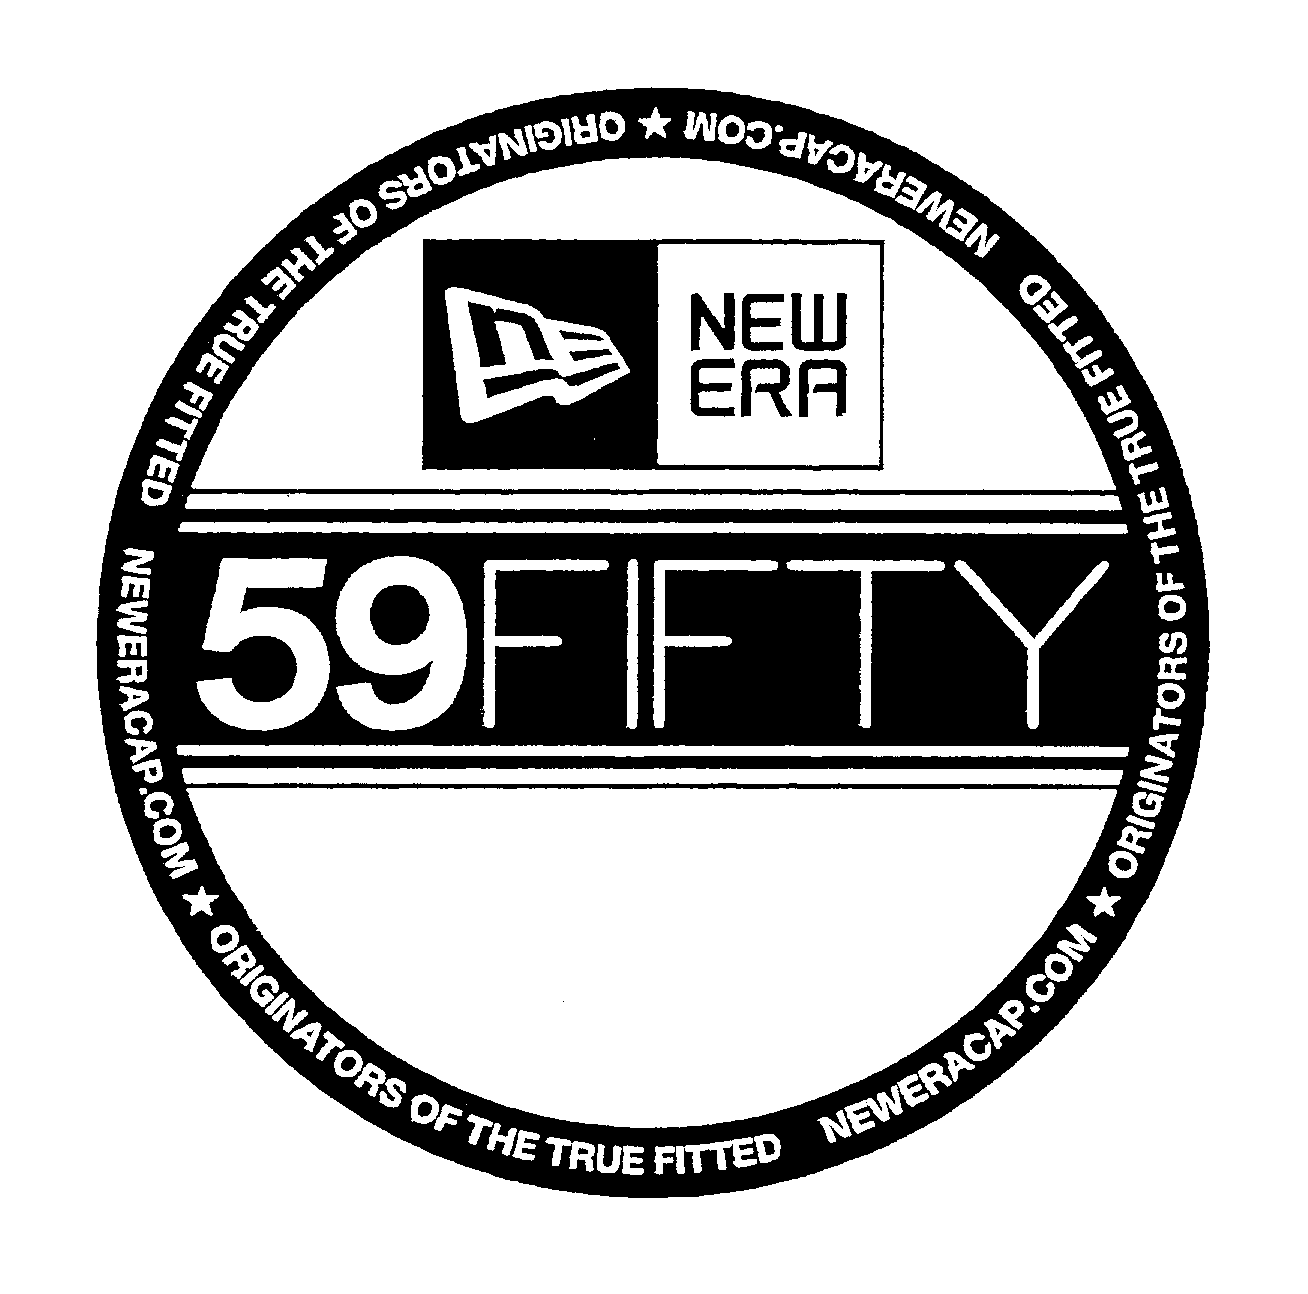 NE NEW ERA 59FIFTY ORIGINATORS OF THE TRUE FITTED NEWERACAP.COM 